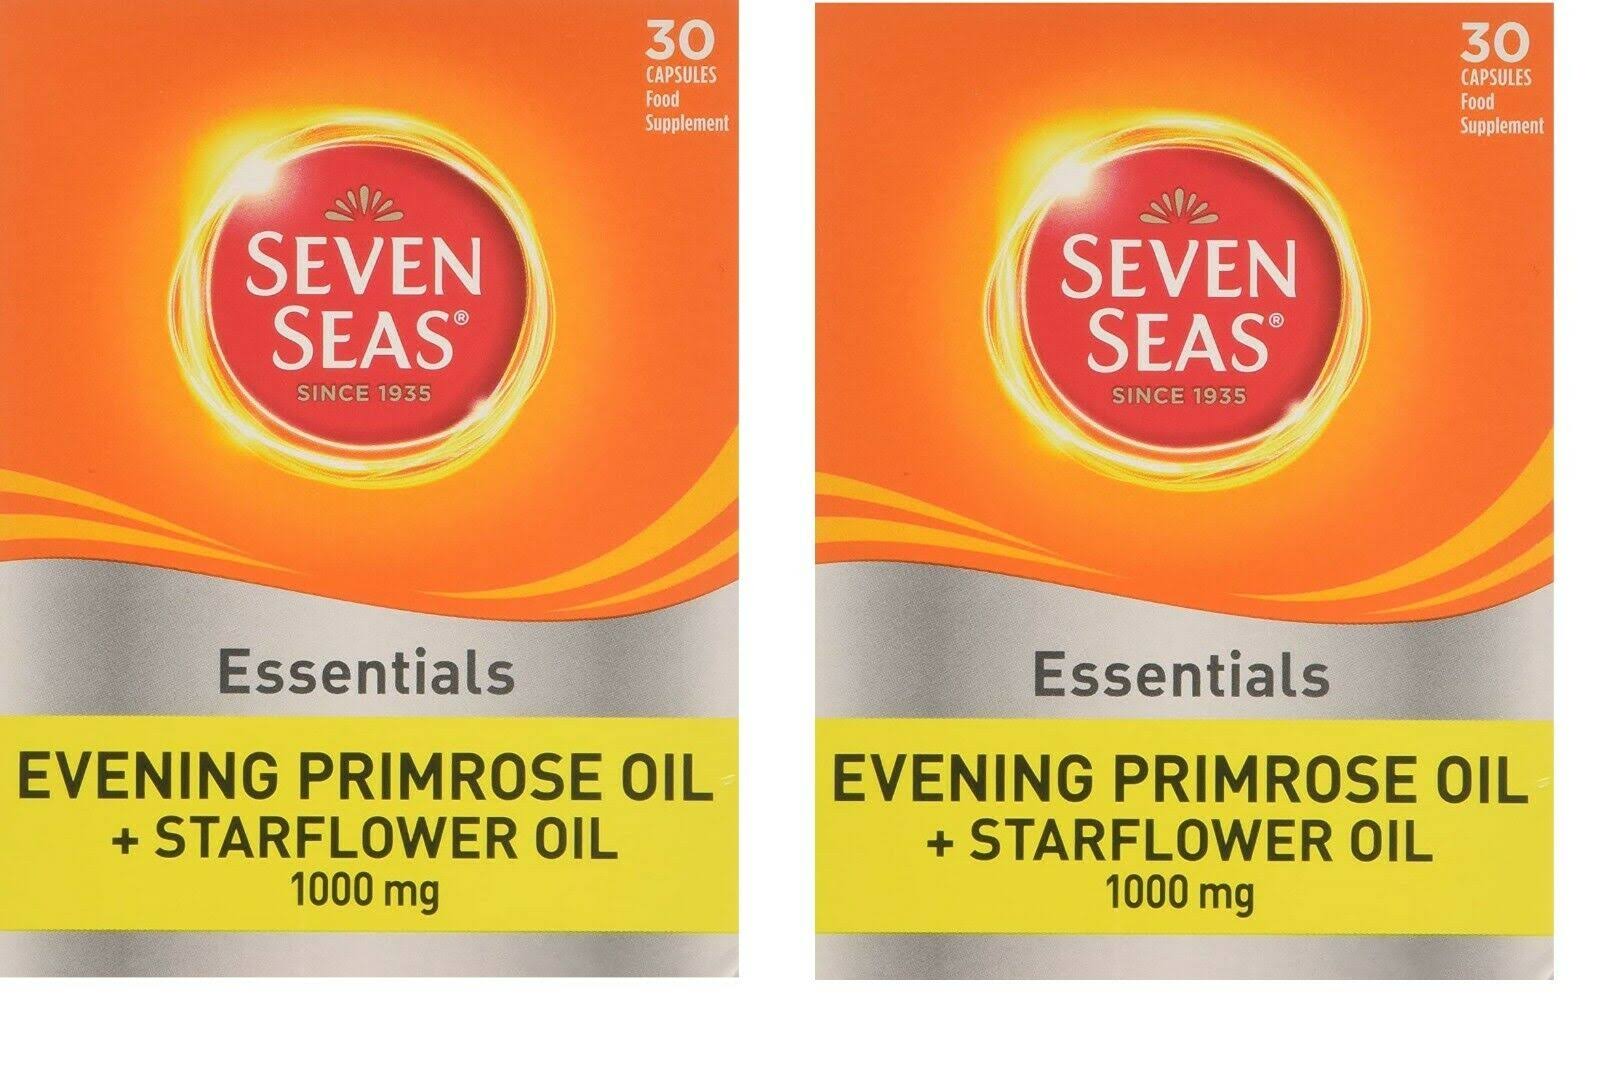 Seven Seas Essentials Evening Primrose Oil + Starflower Oil - 30 Pack